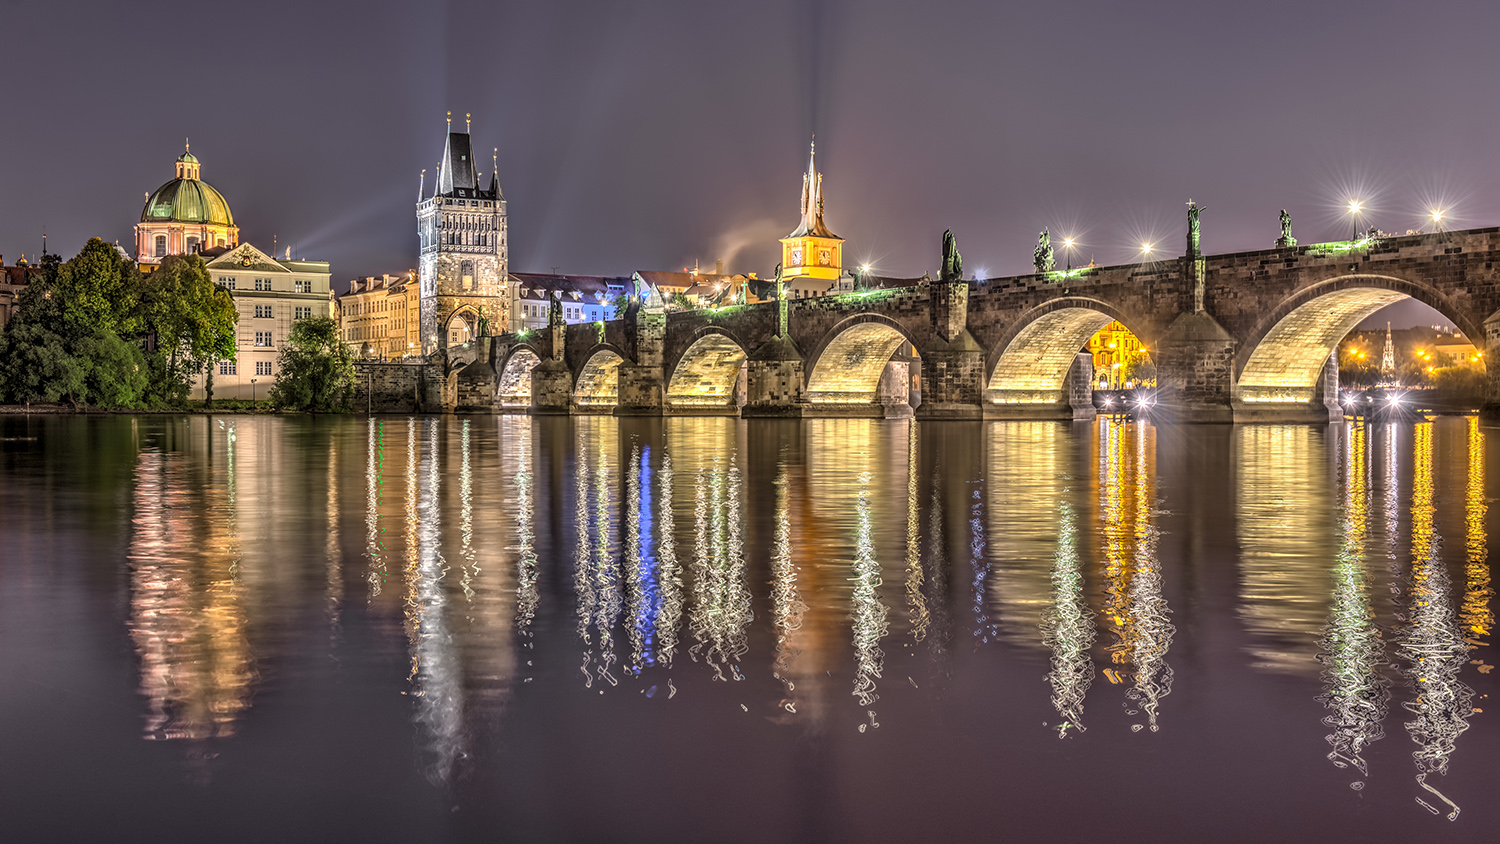 Charles bridge in Prague, Czech Republic